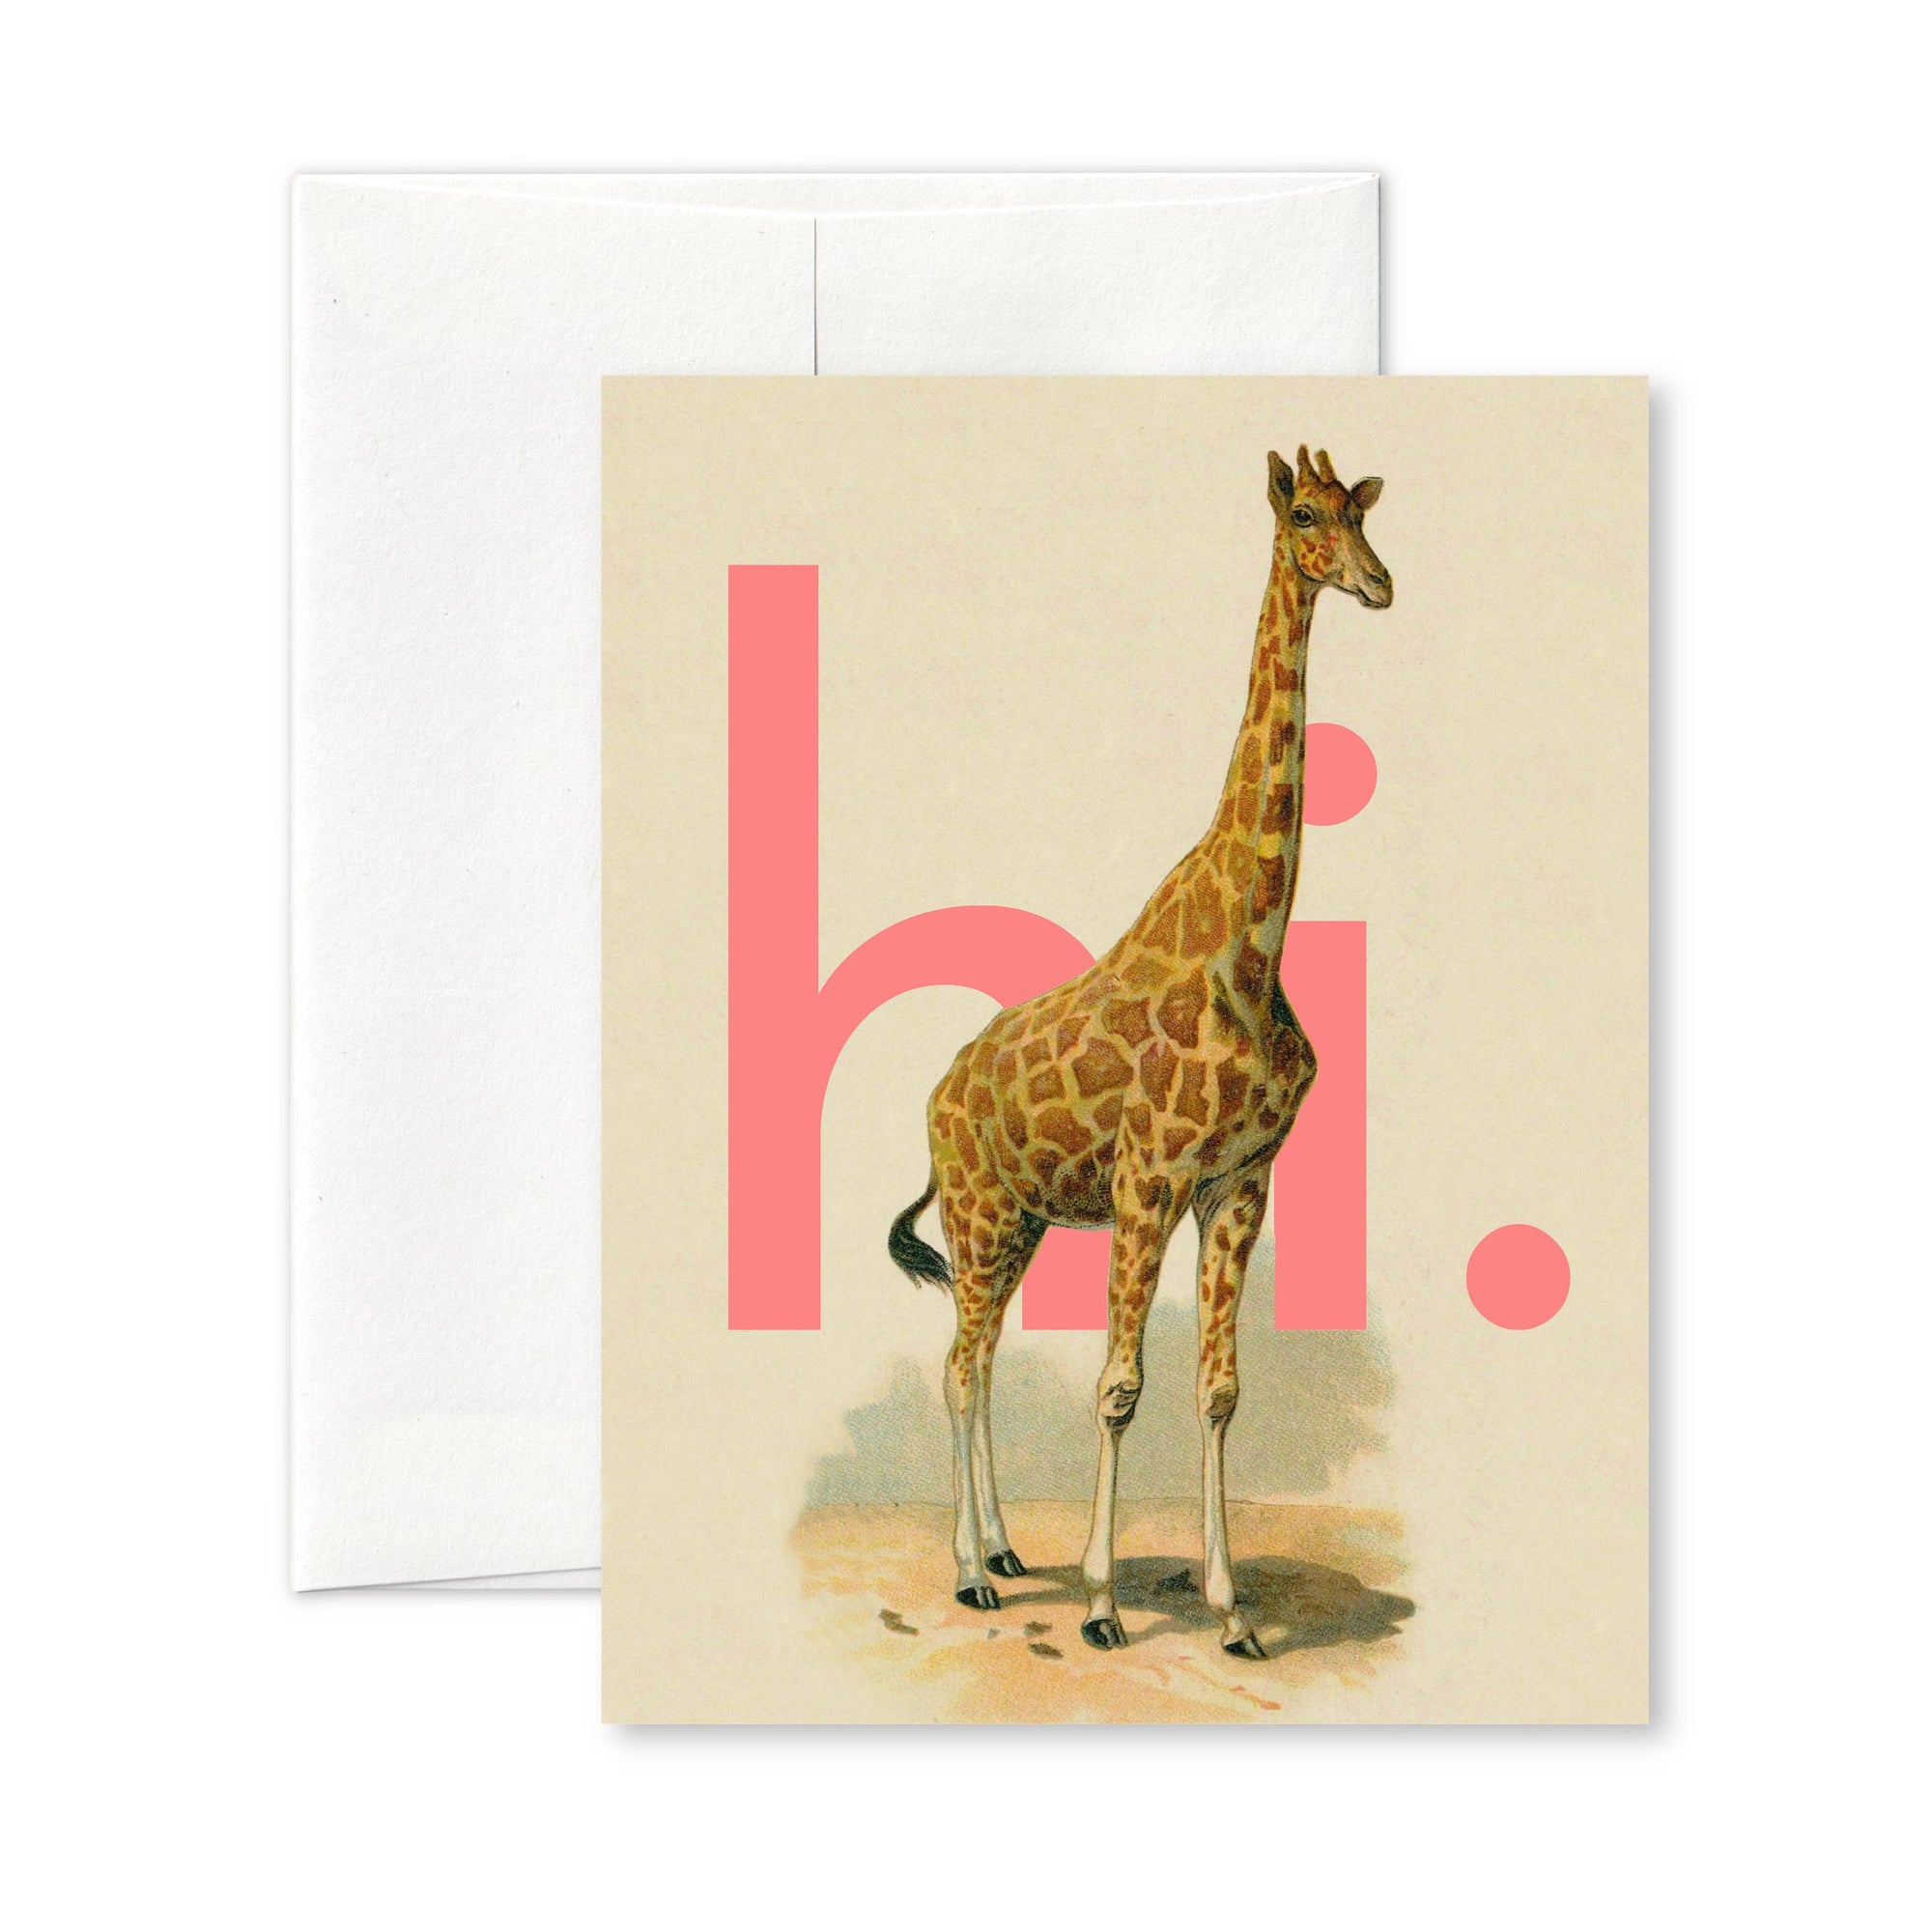 “Hi.” Giraffe Greeting Card